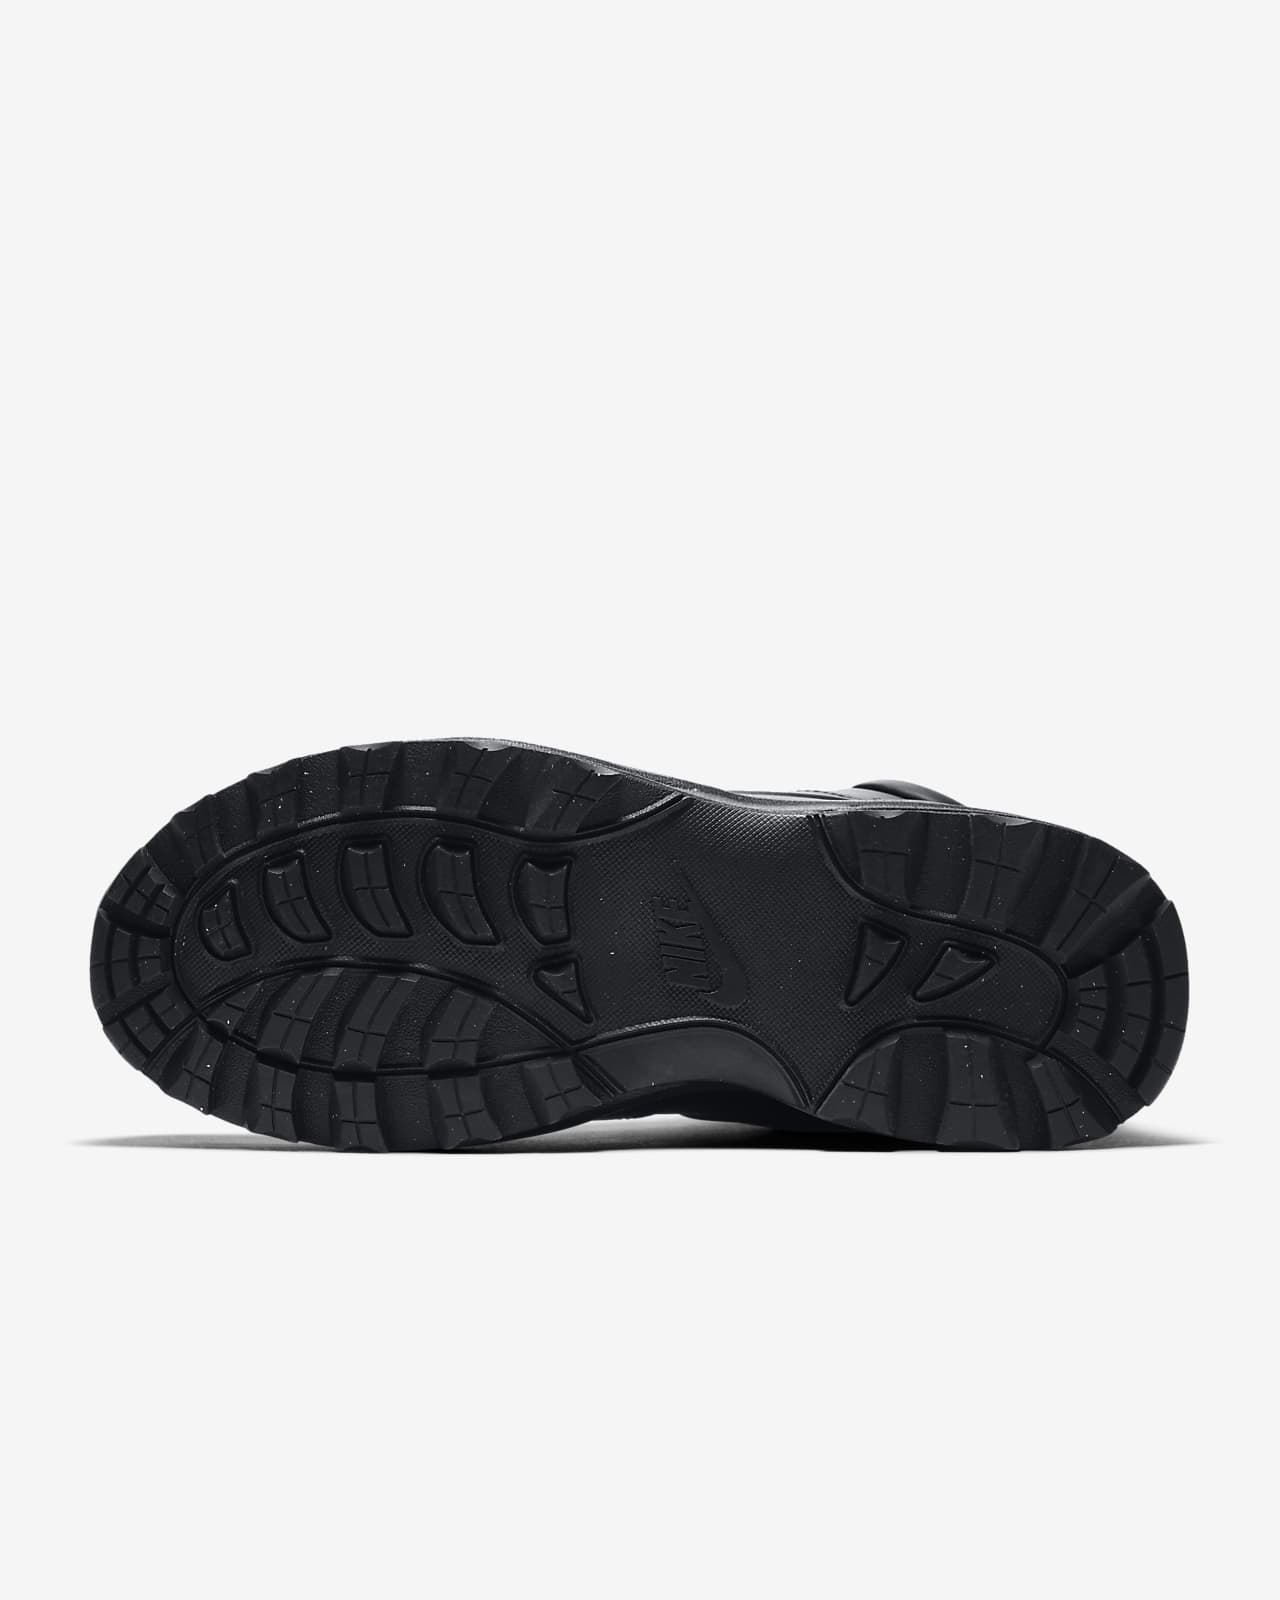 Nike Manoa Leather Boots. Nike.com